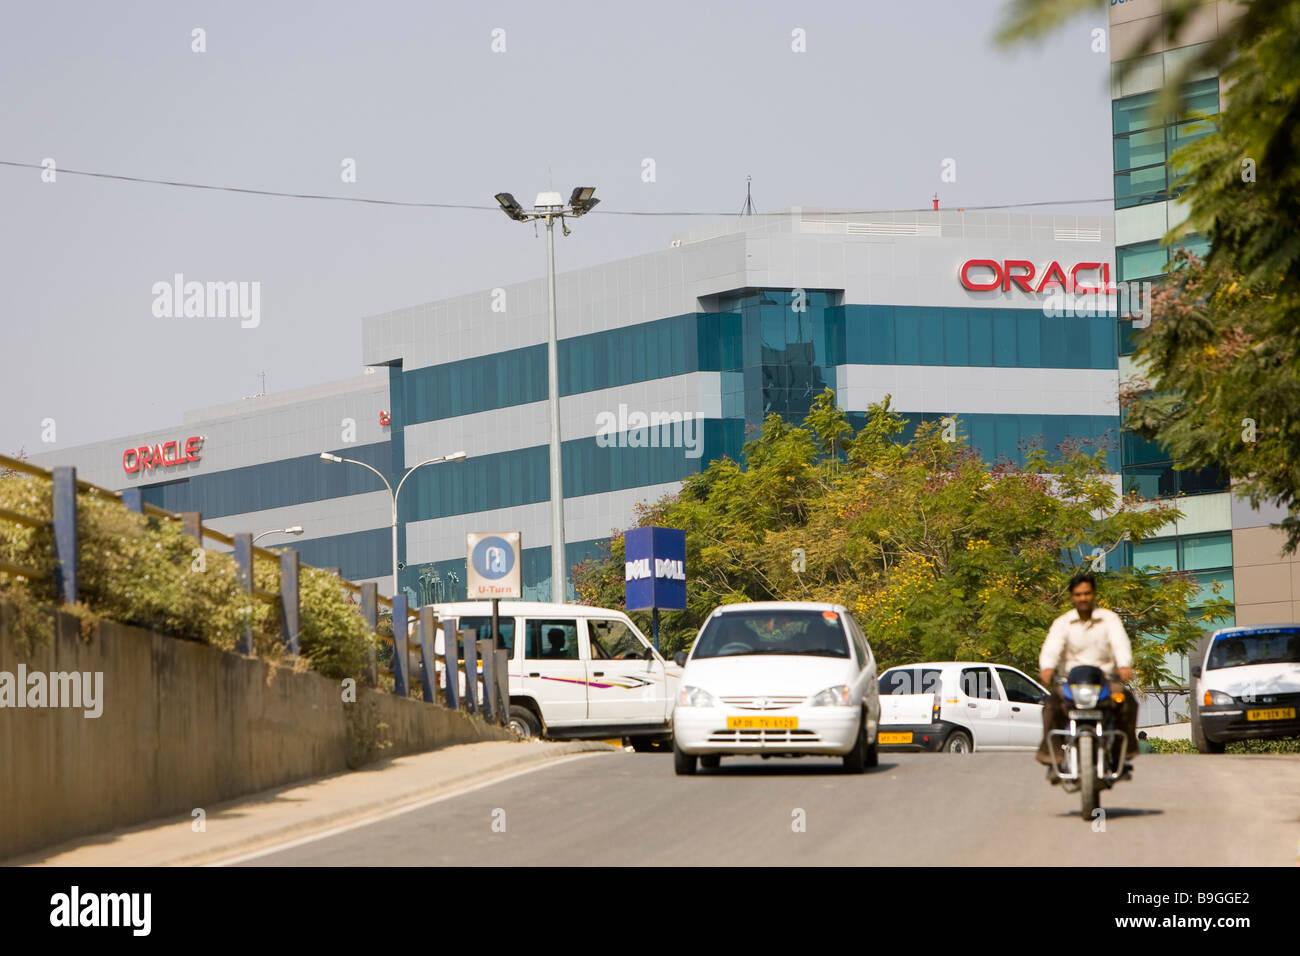 India Hyderabad Hi Tech City Oracle Buildings Stock Photo Alamy